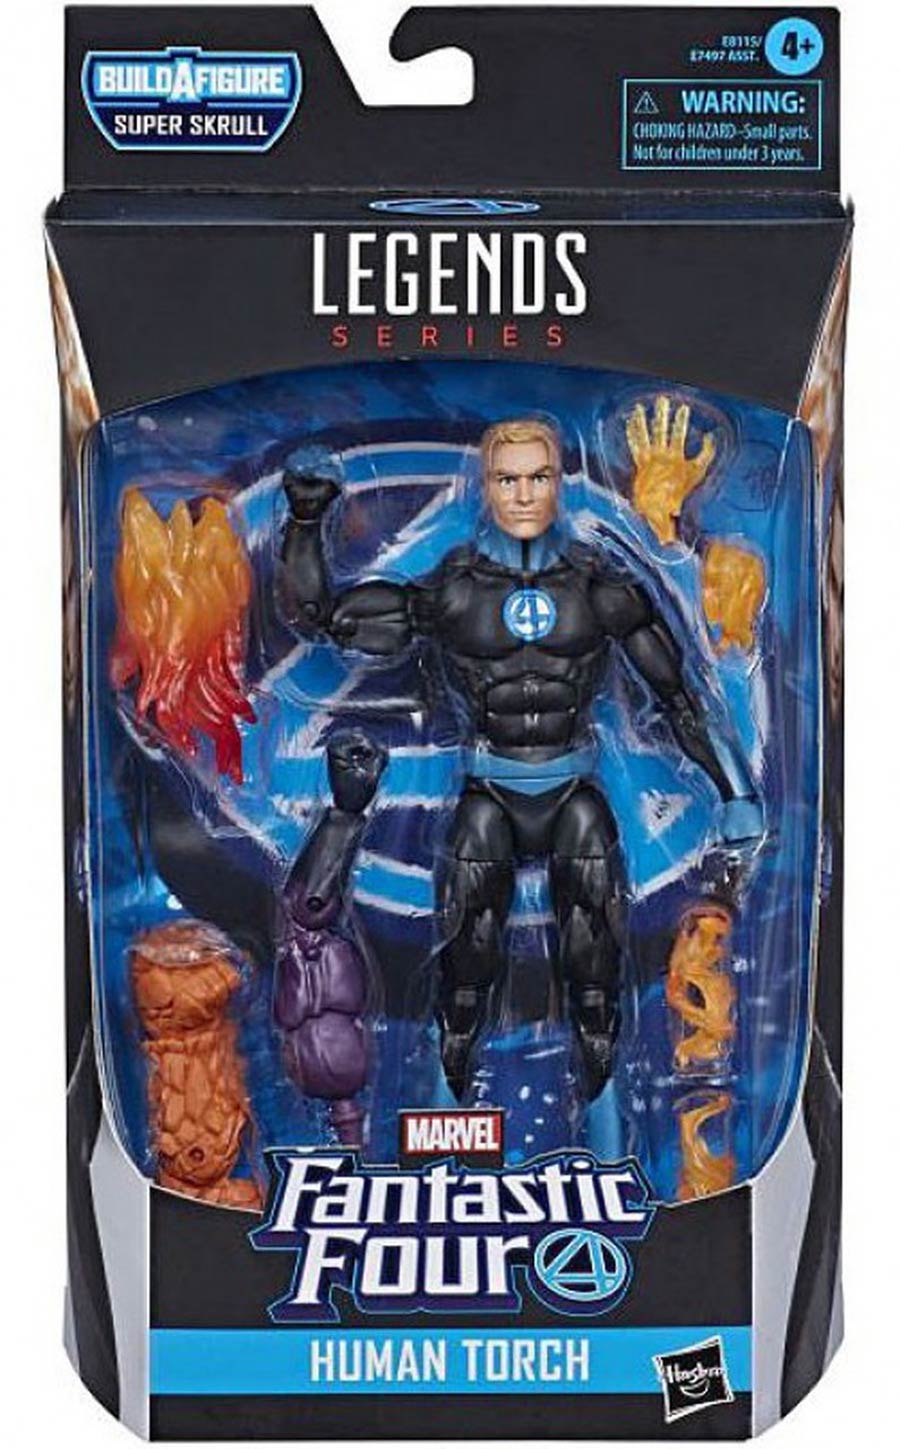 Marvel Fantastic Four Legends 2019 6-inch Action Figure - Human Torch